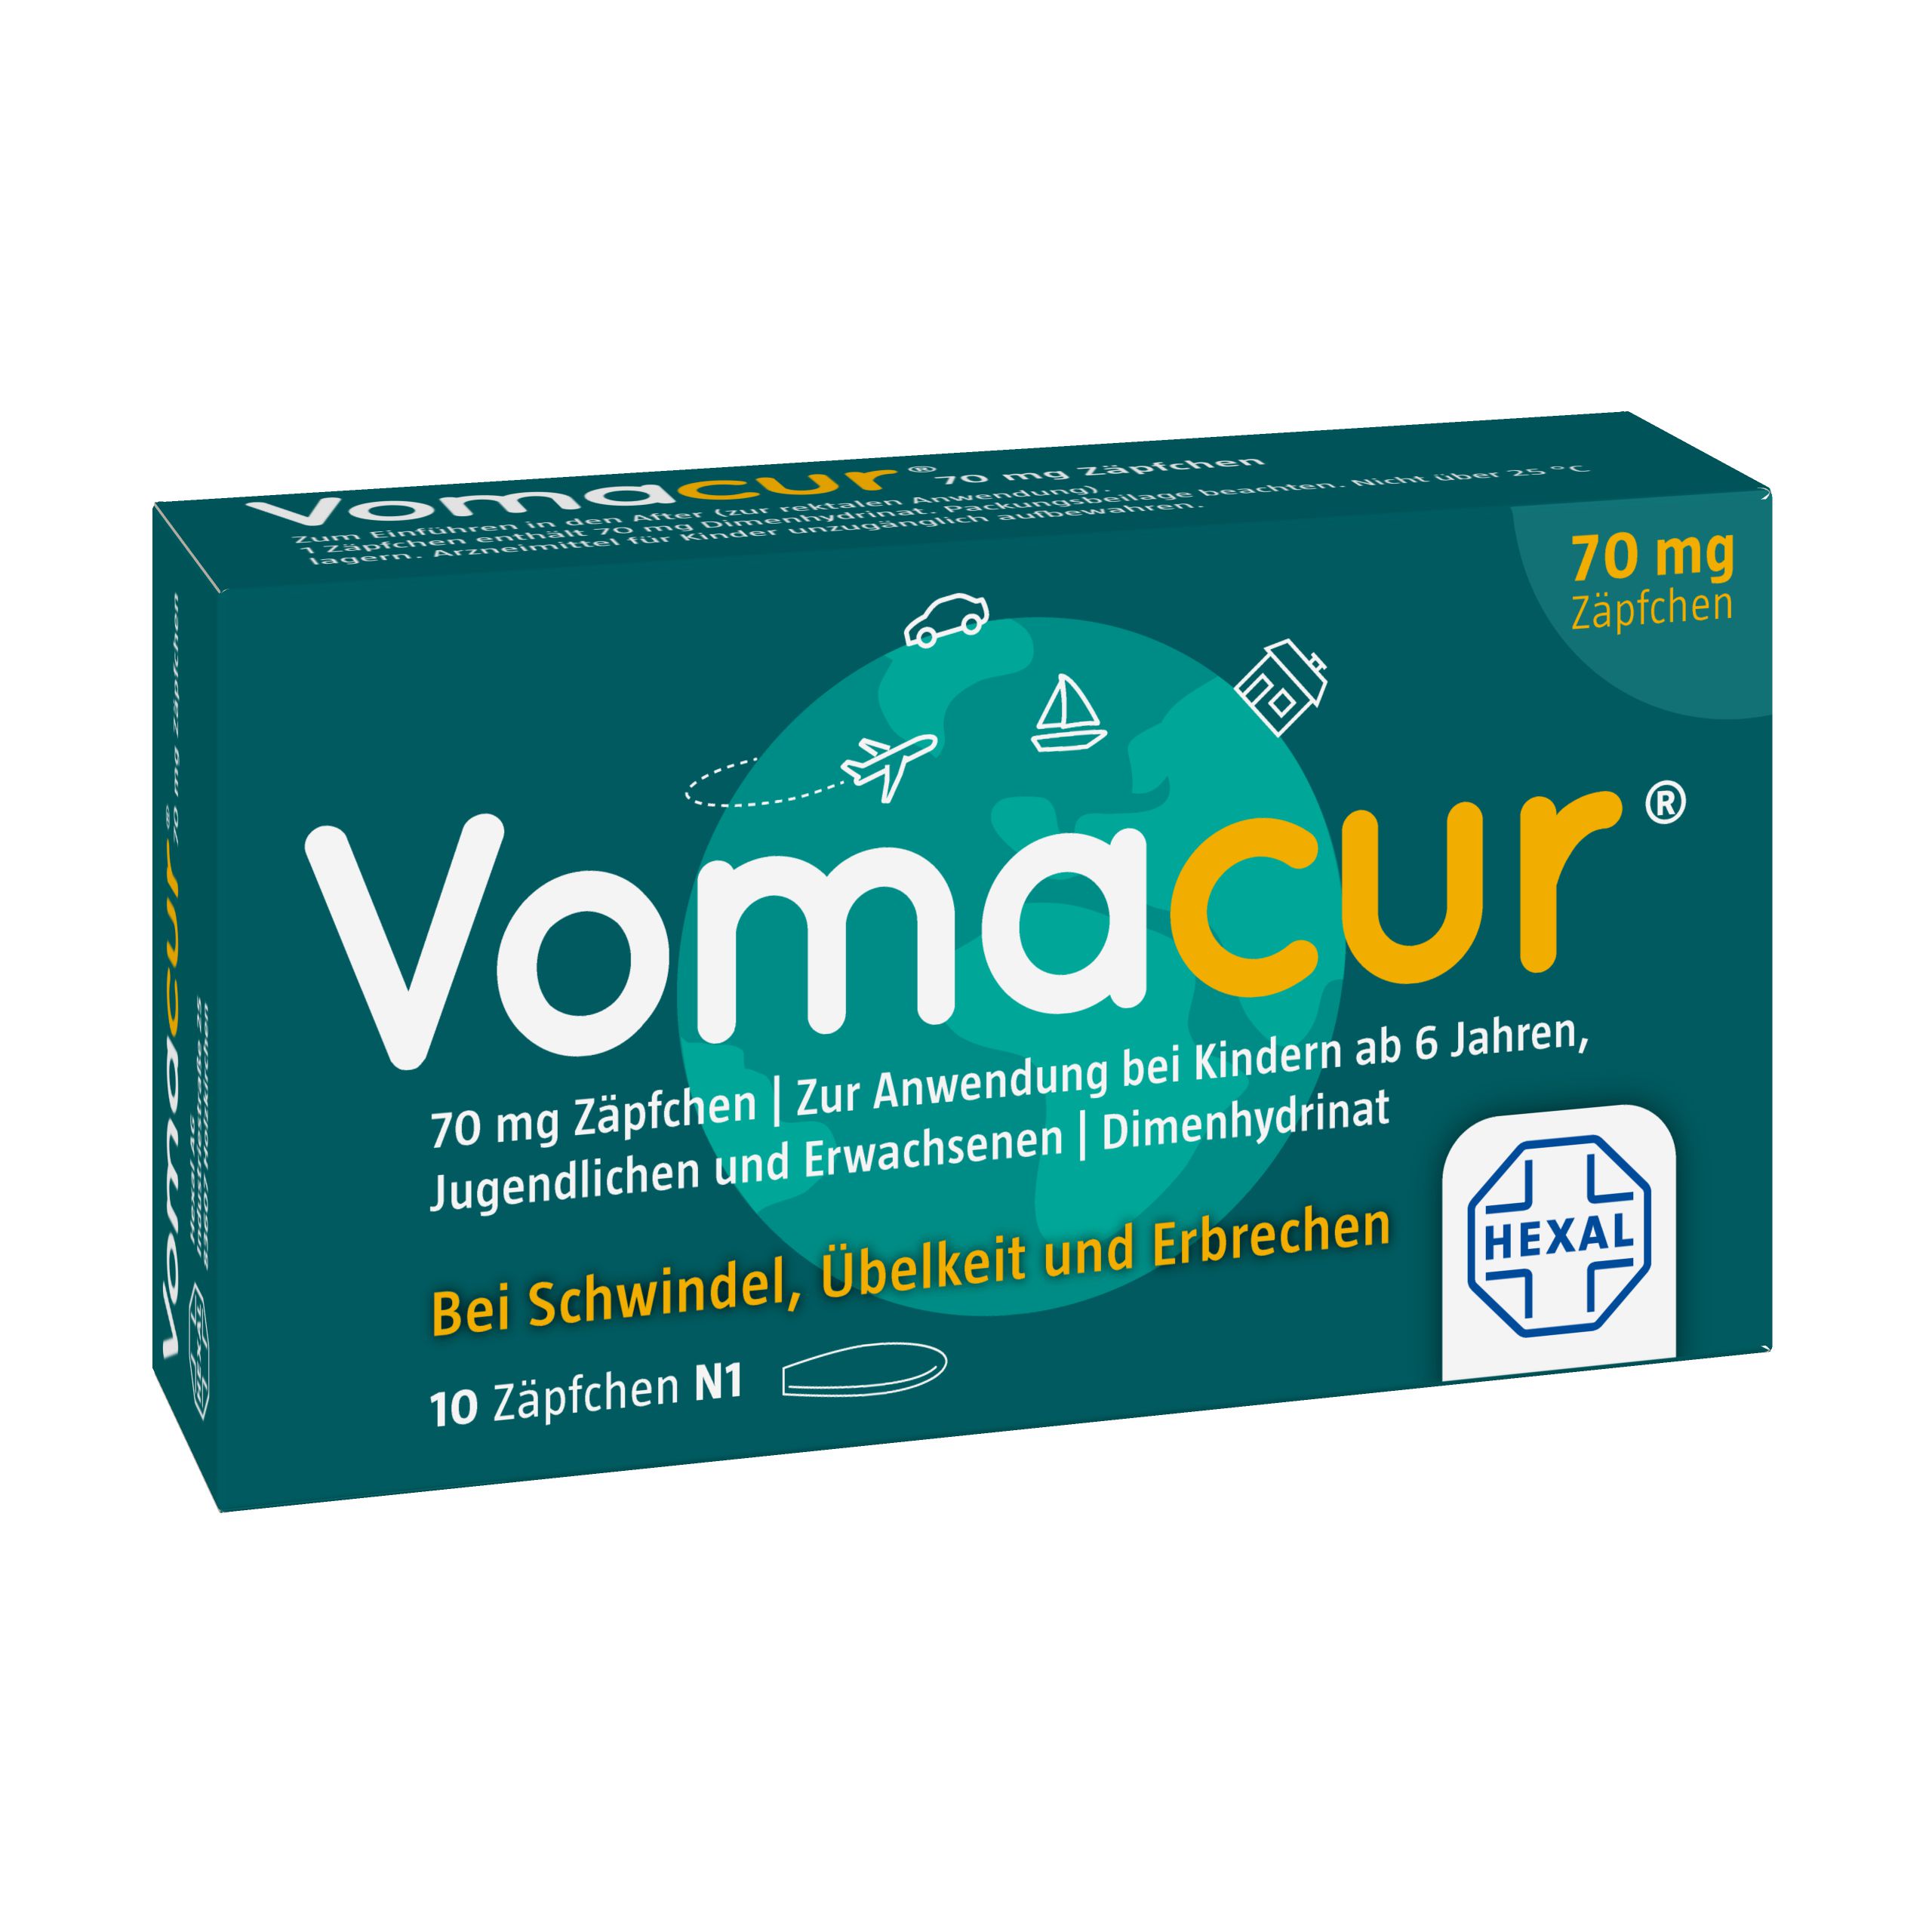 Vomacur® 70 mg, Zäpfchen - shop-apotheke.com